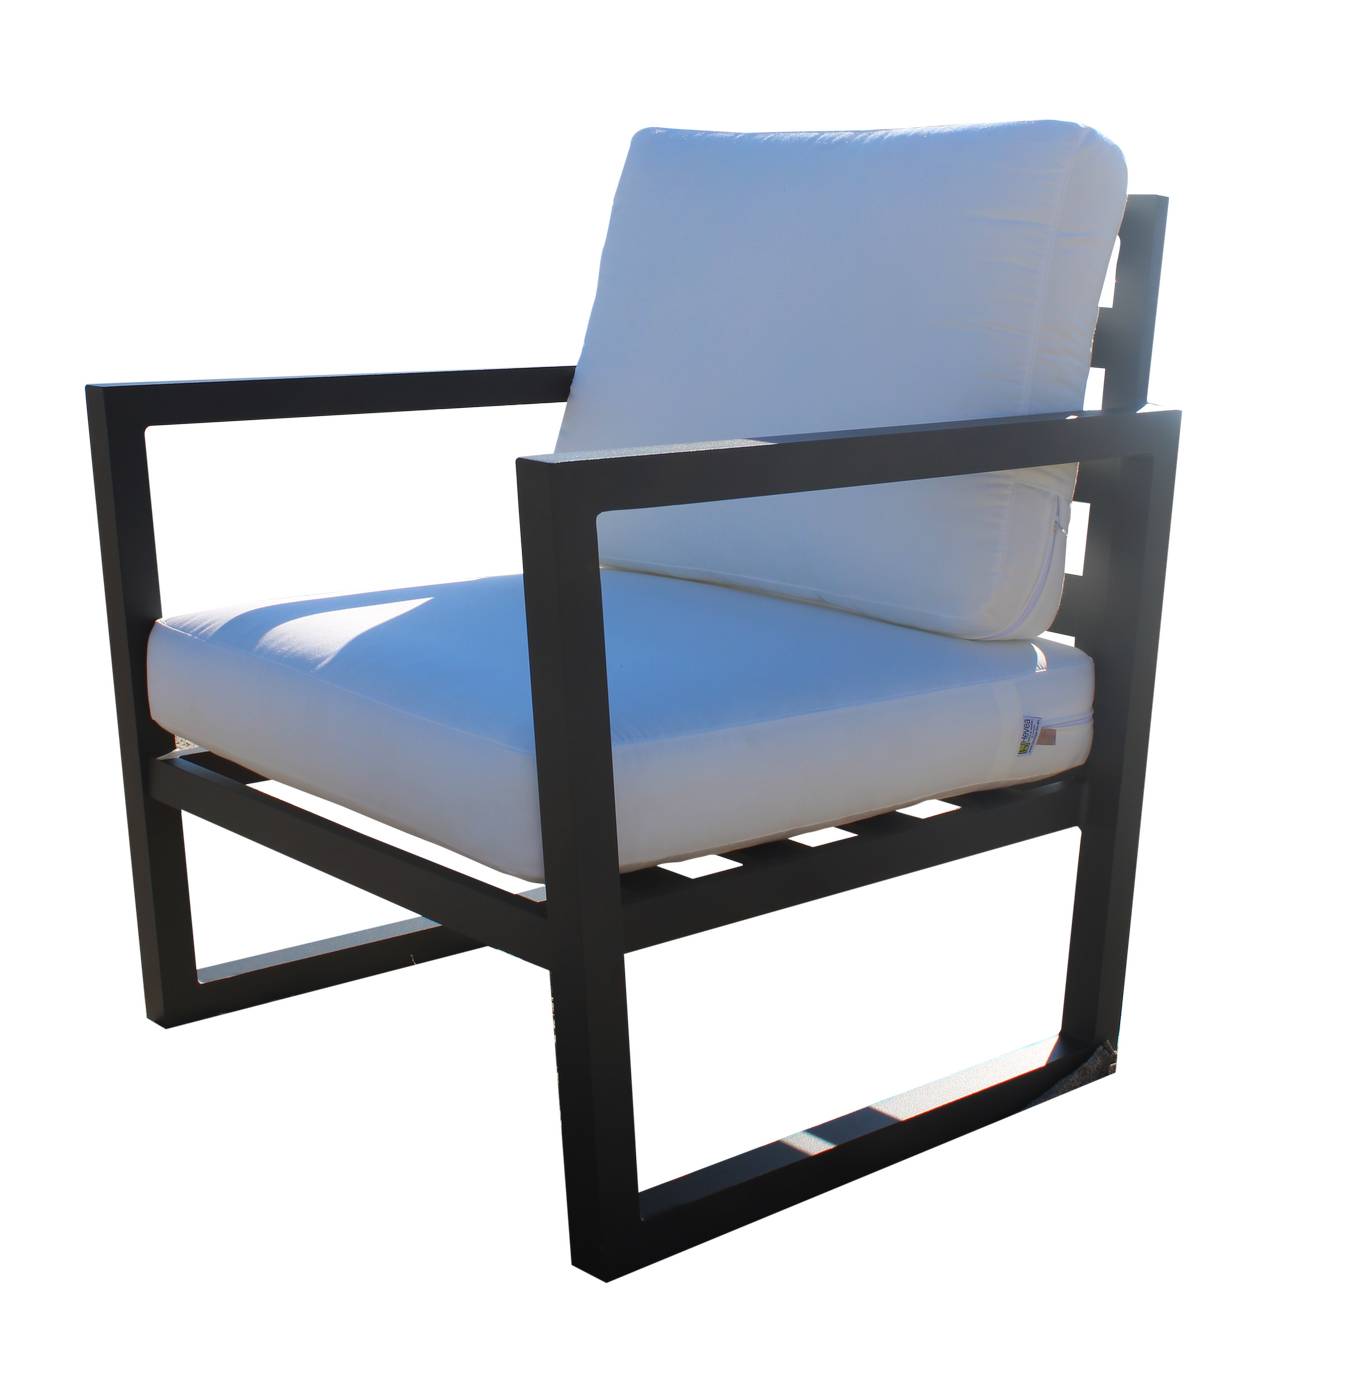 Set Aluminio Alpine-7 - Conjunto de aluminio para exterior: sofá 2 plazas + 2 sillones + mesa de centro. Disponible en color blanco, antracita, champagne, plata o marrón.